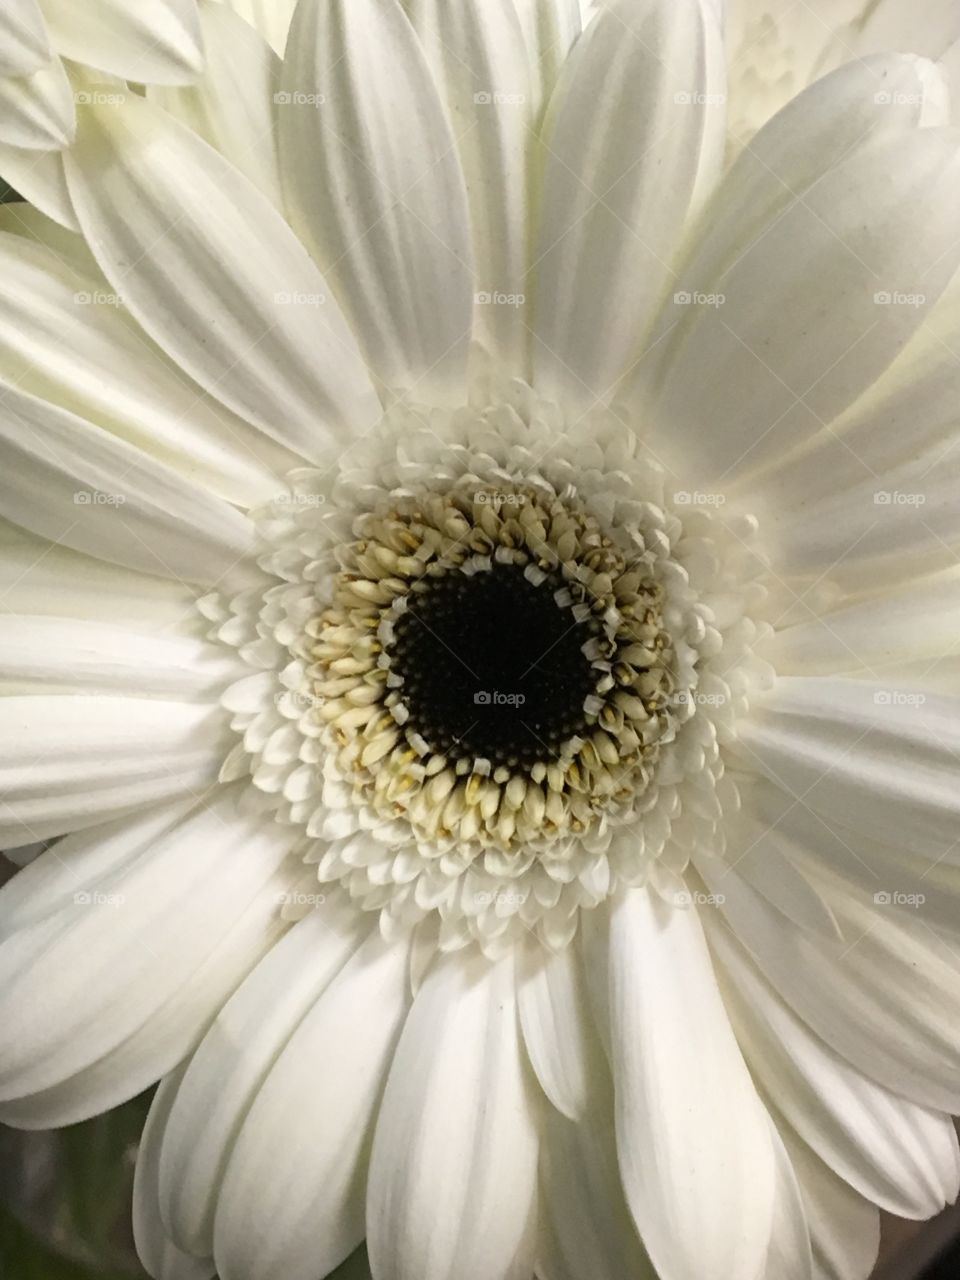 White Gerbera Daisy 